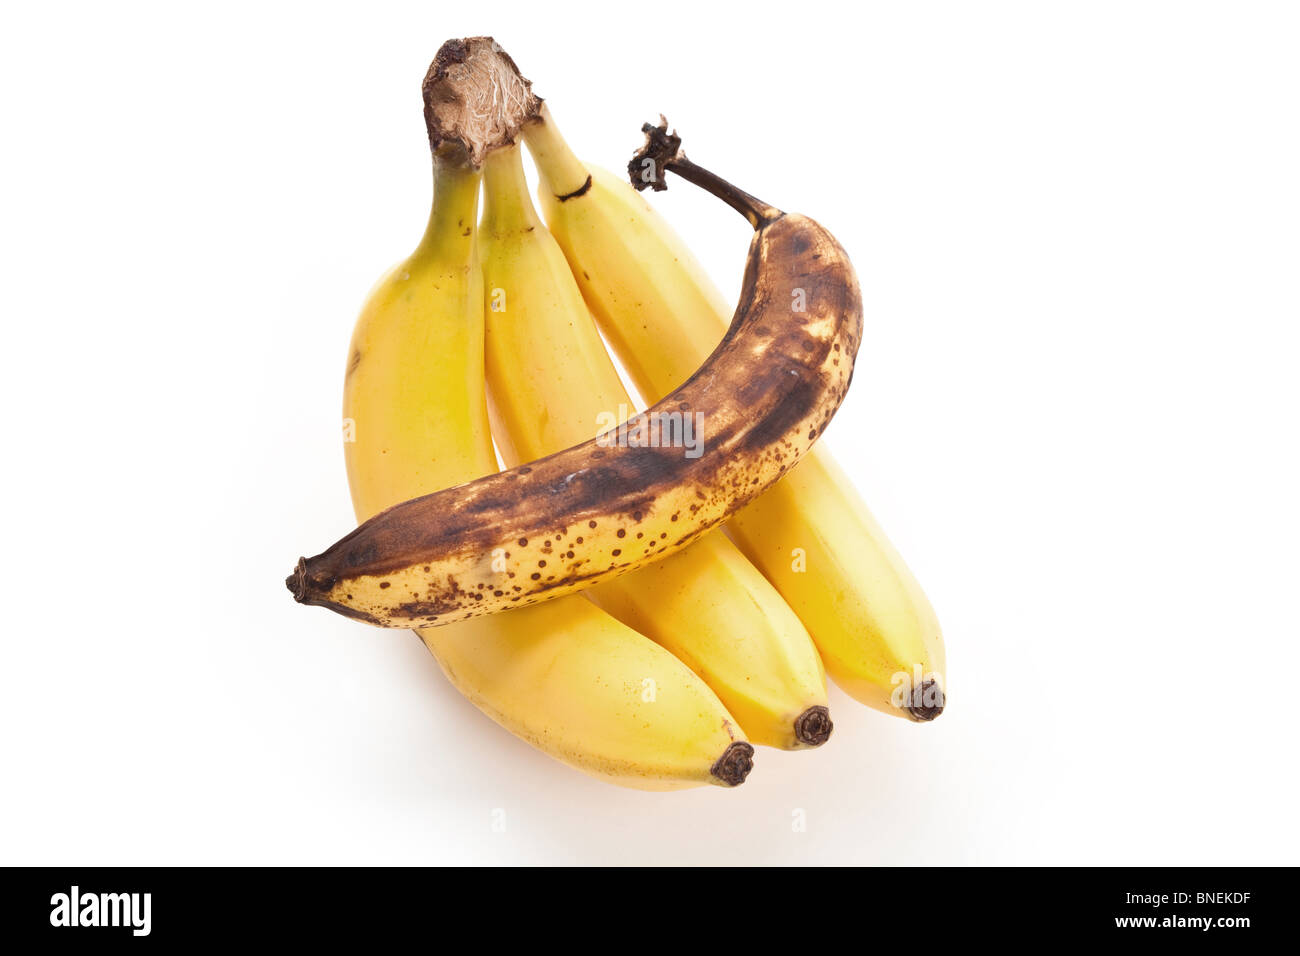 https://c8.alamy.com/comp/BNEKDF/good-and-bad-banana-close-up-BNEKDF.jpg